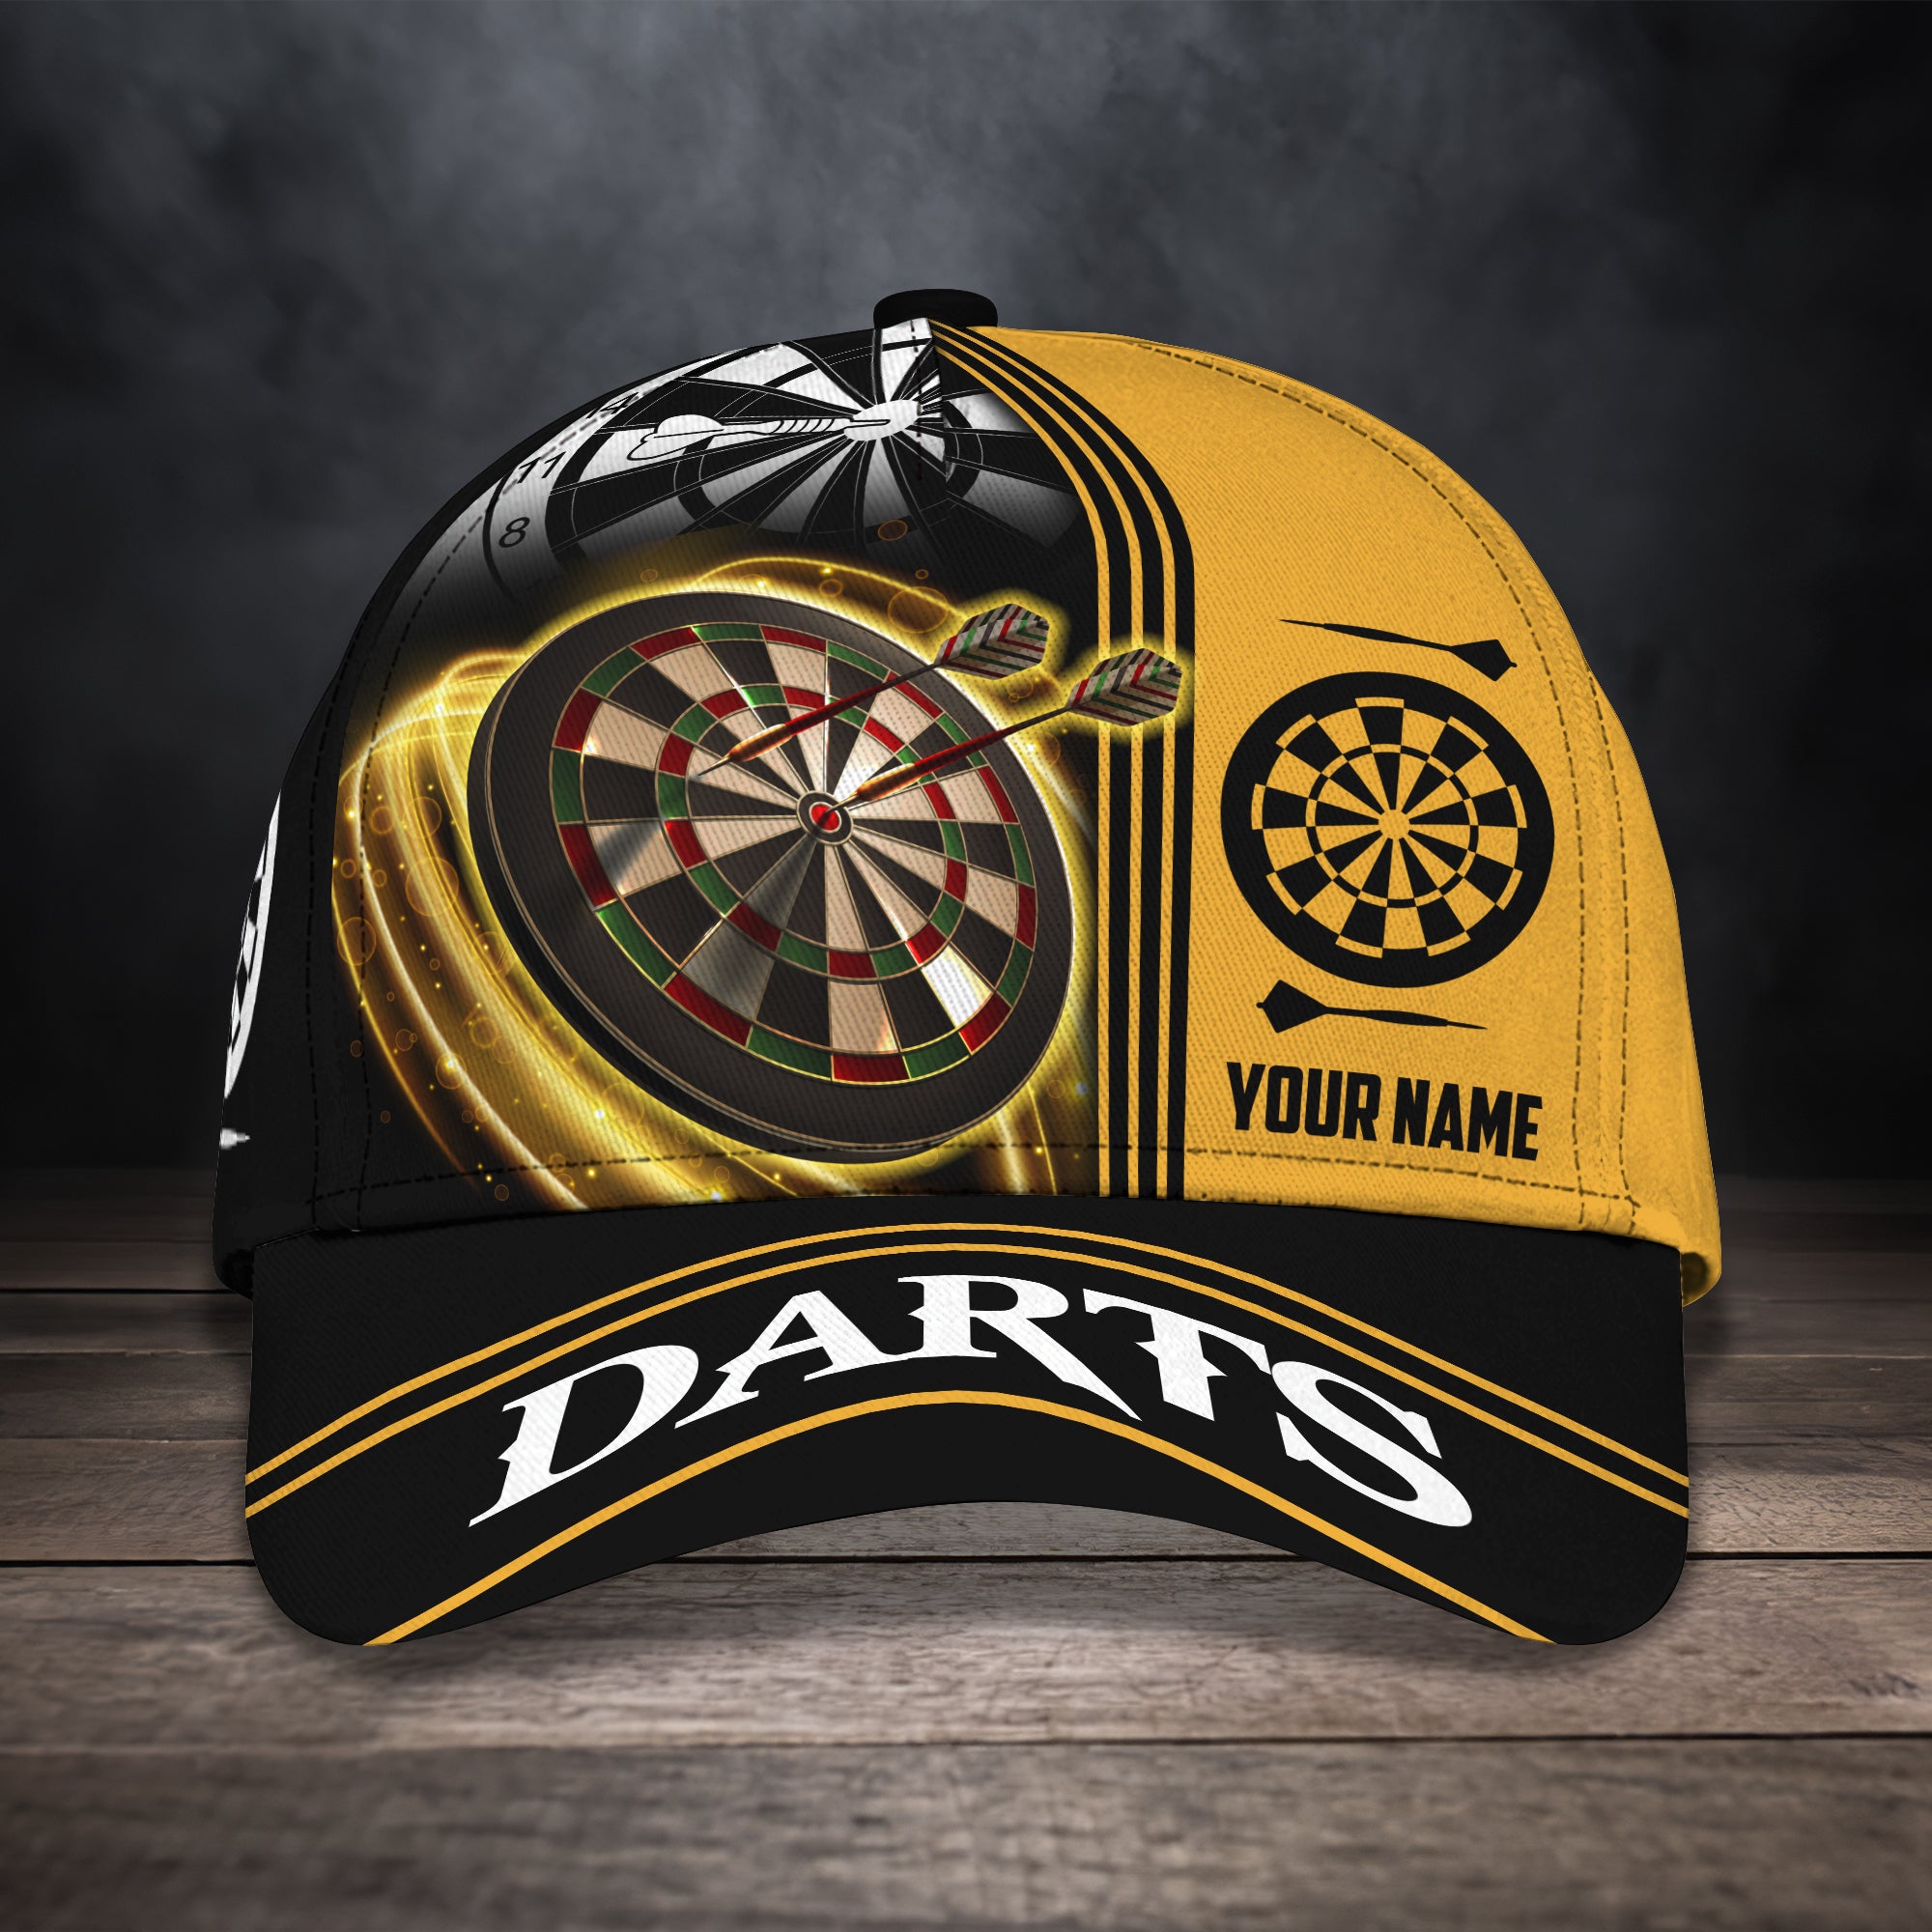 Darts 22 - Personalized Name Cap - Hadn